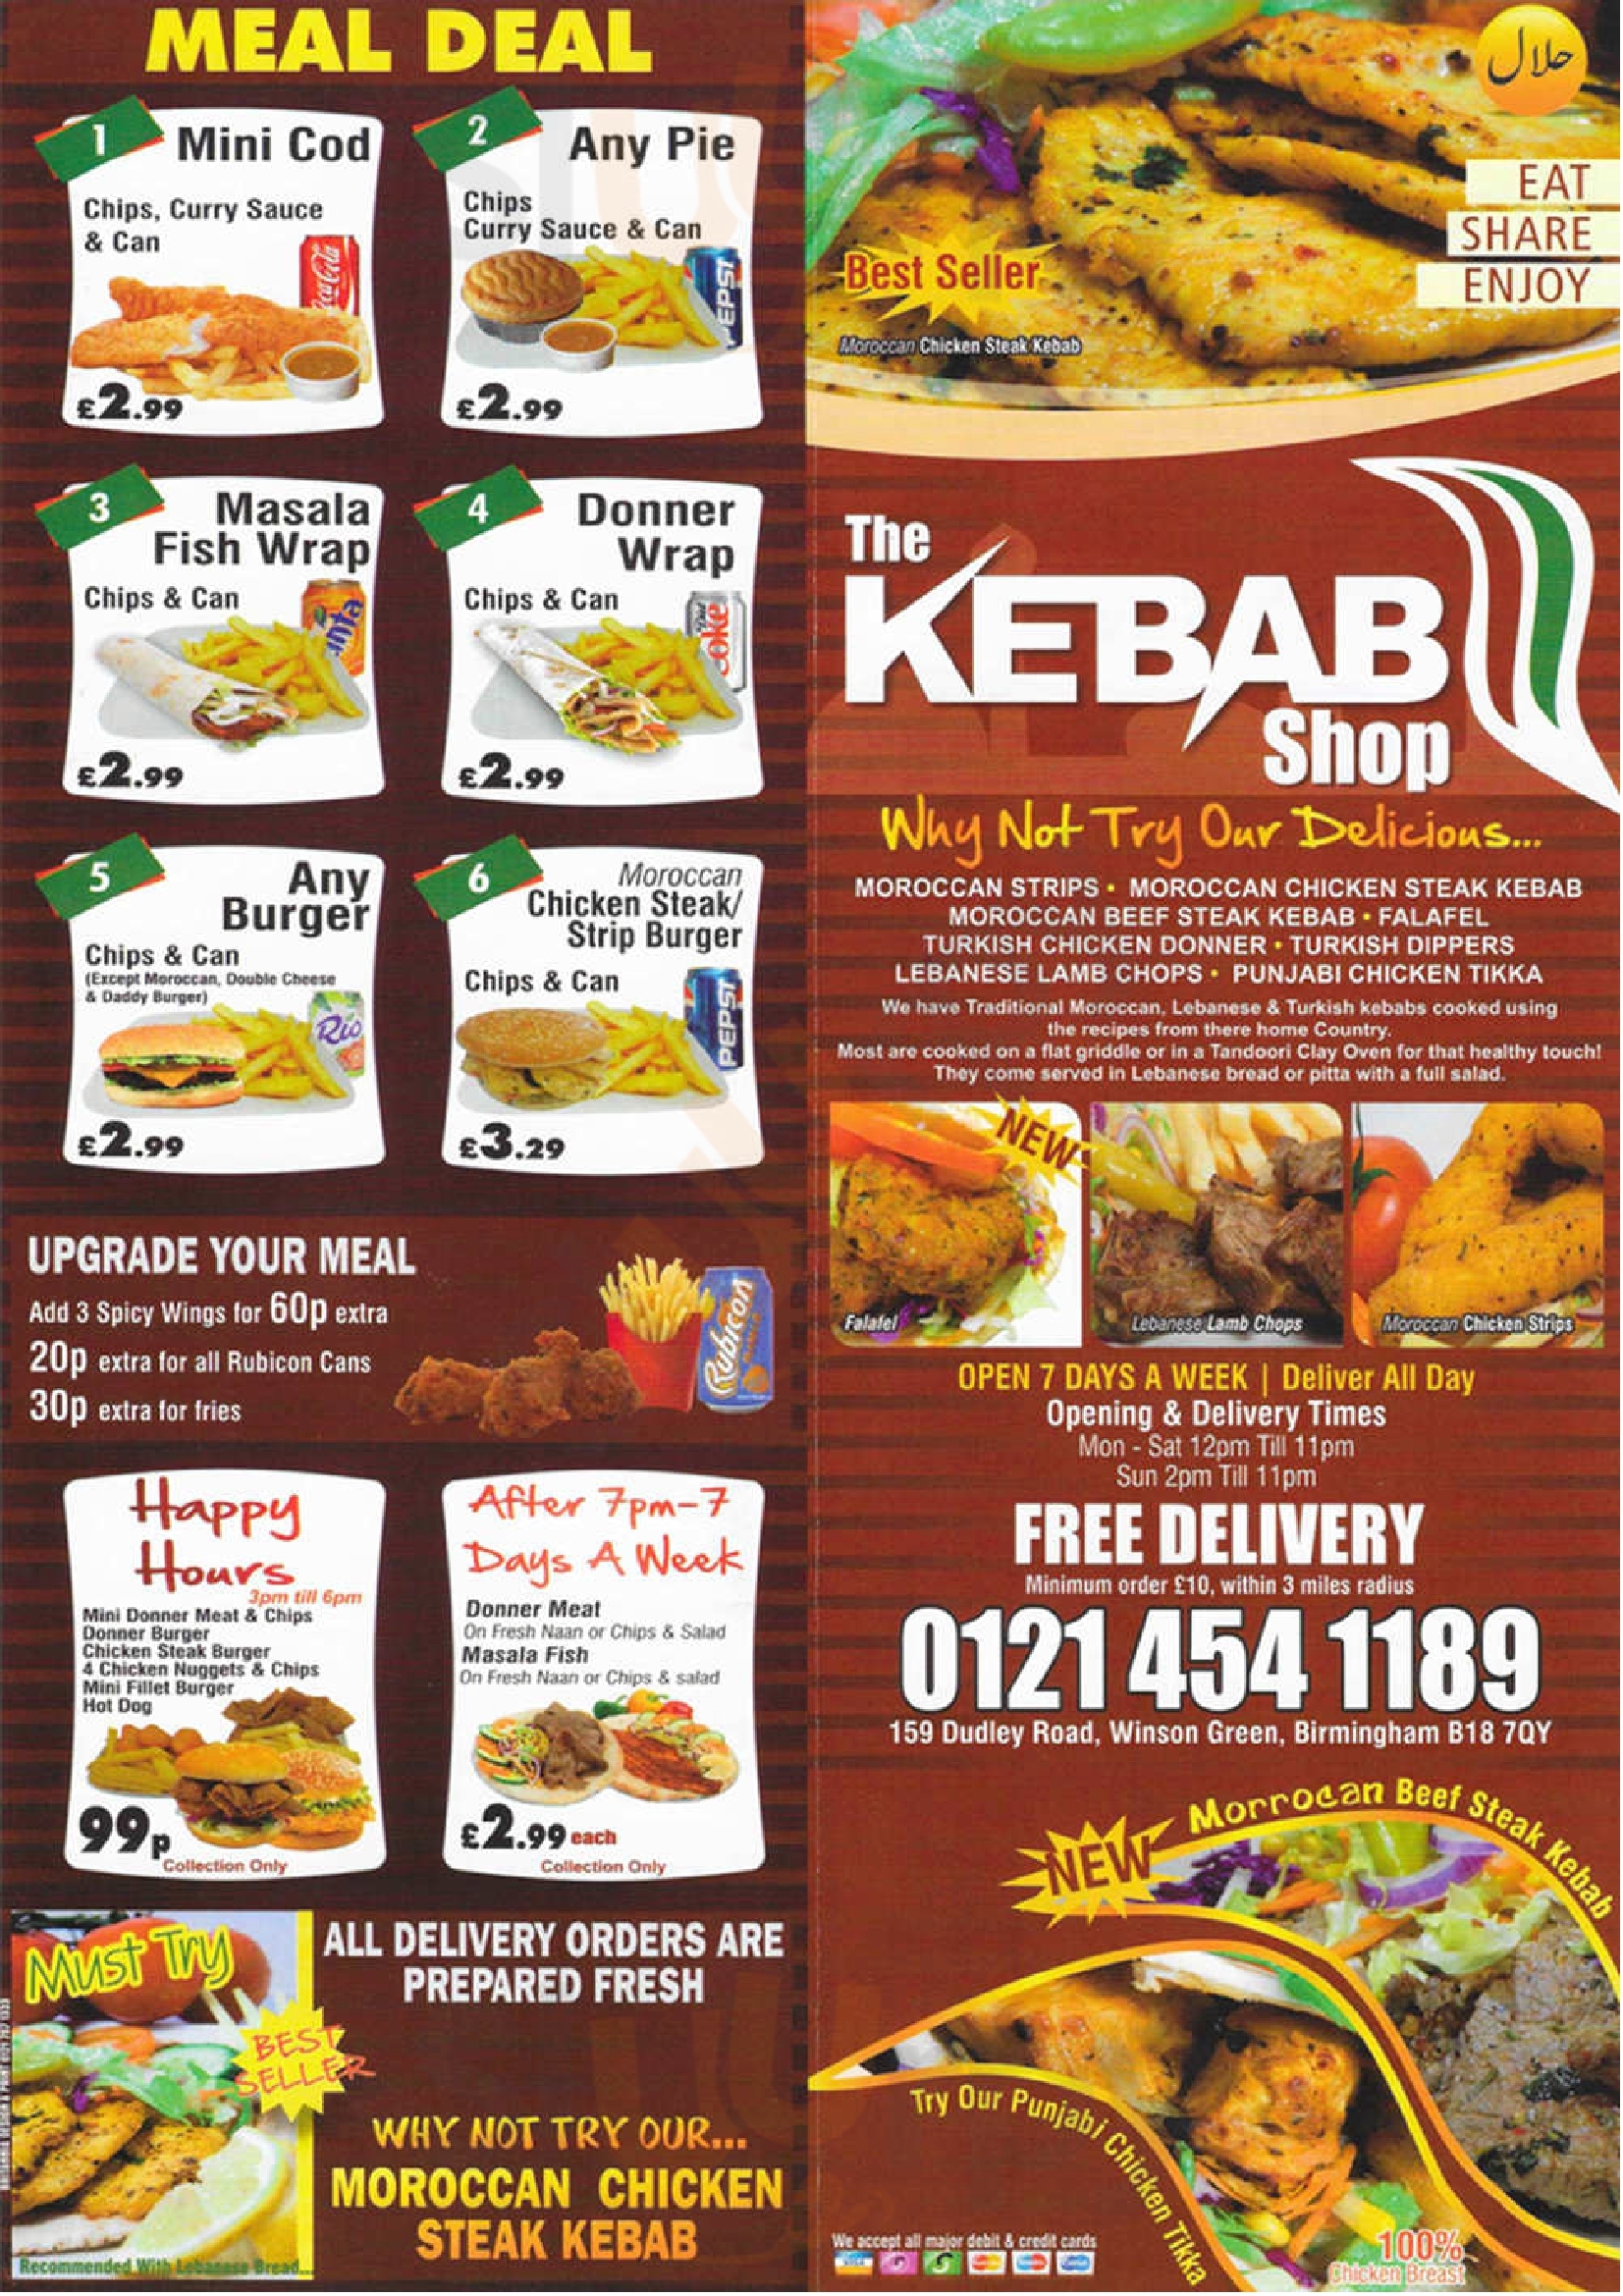 The Kebab Shop Birmingham Menu - 1